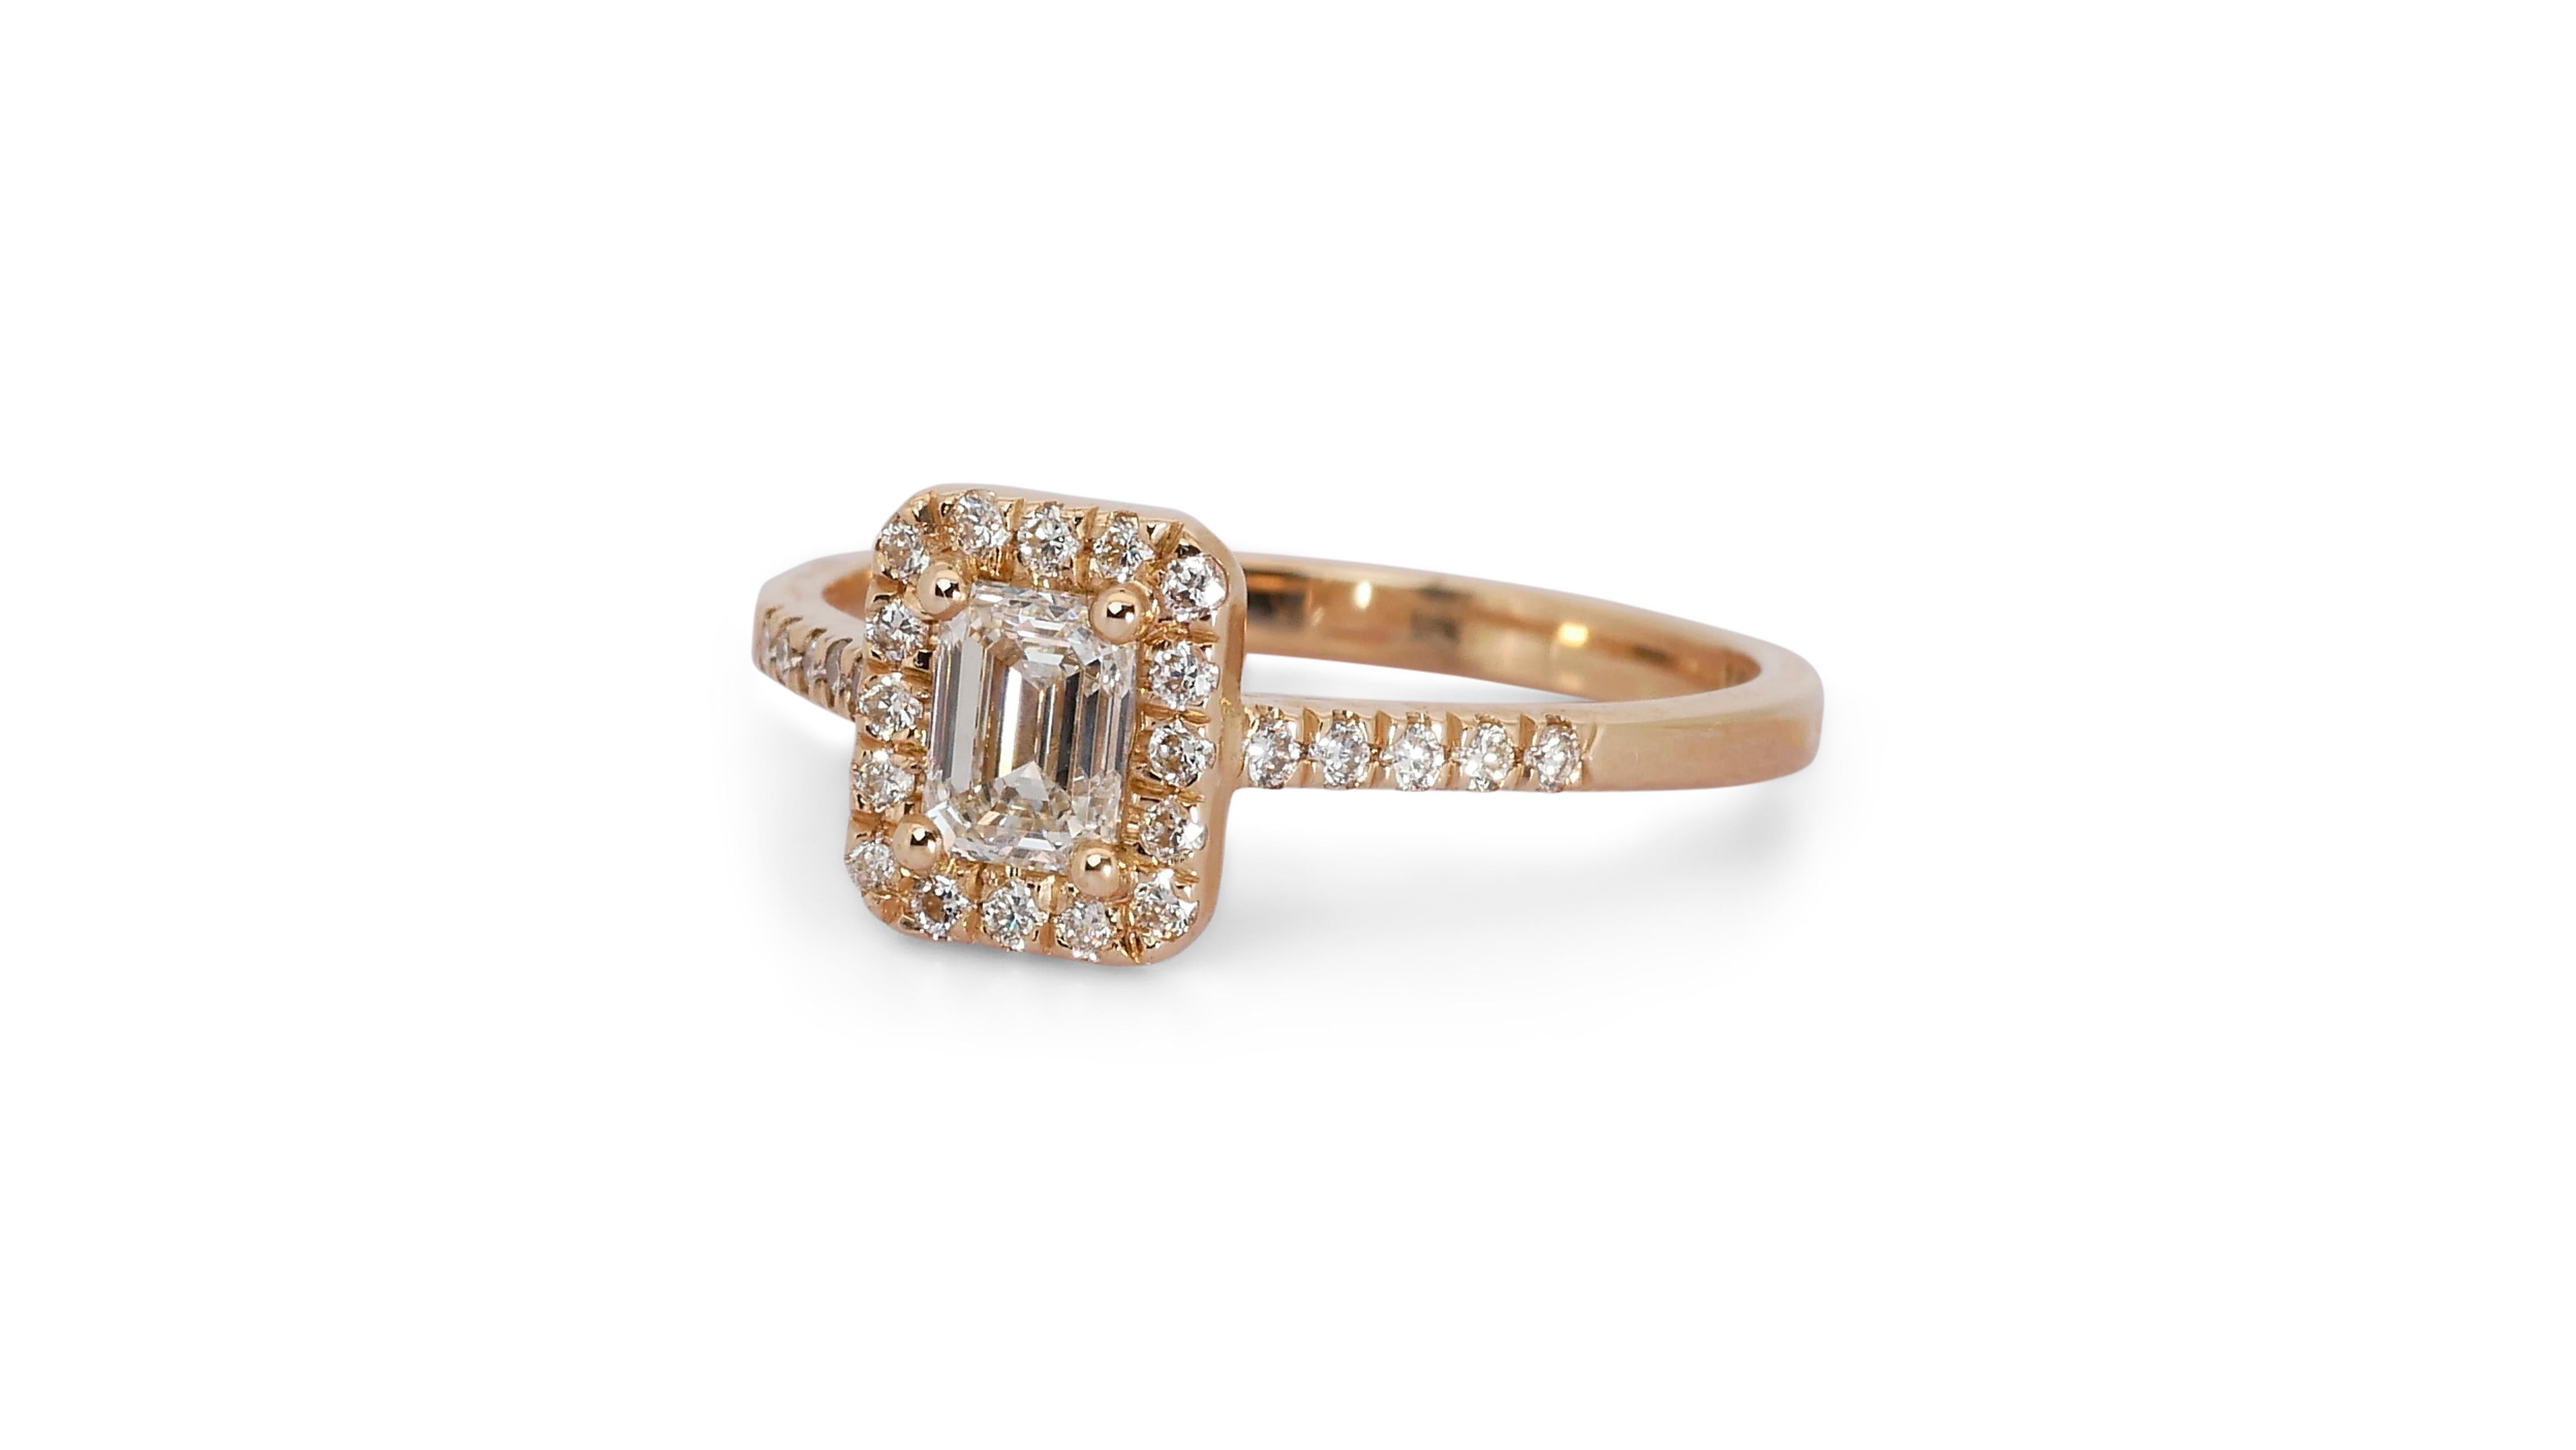 Ravishing 18k Rose Gold Halo Ring w/ 0.84 Carat Natural Diamonds IGI Cert In New Condition For Sale In רמת גן, IL